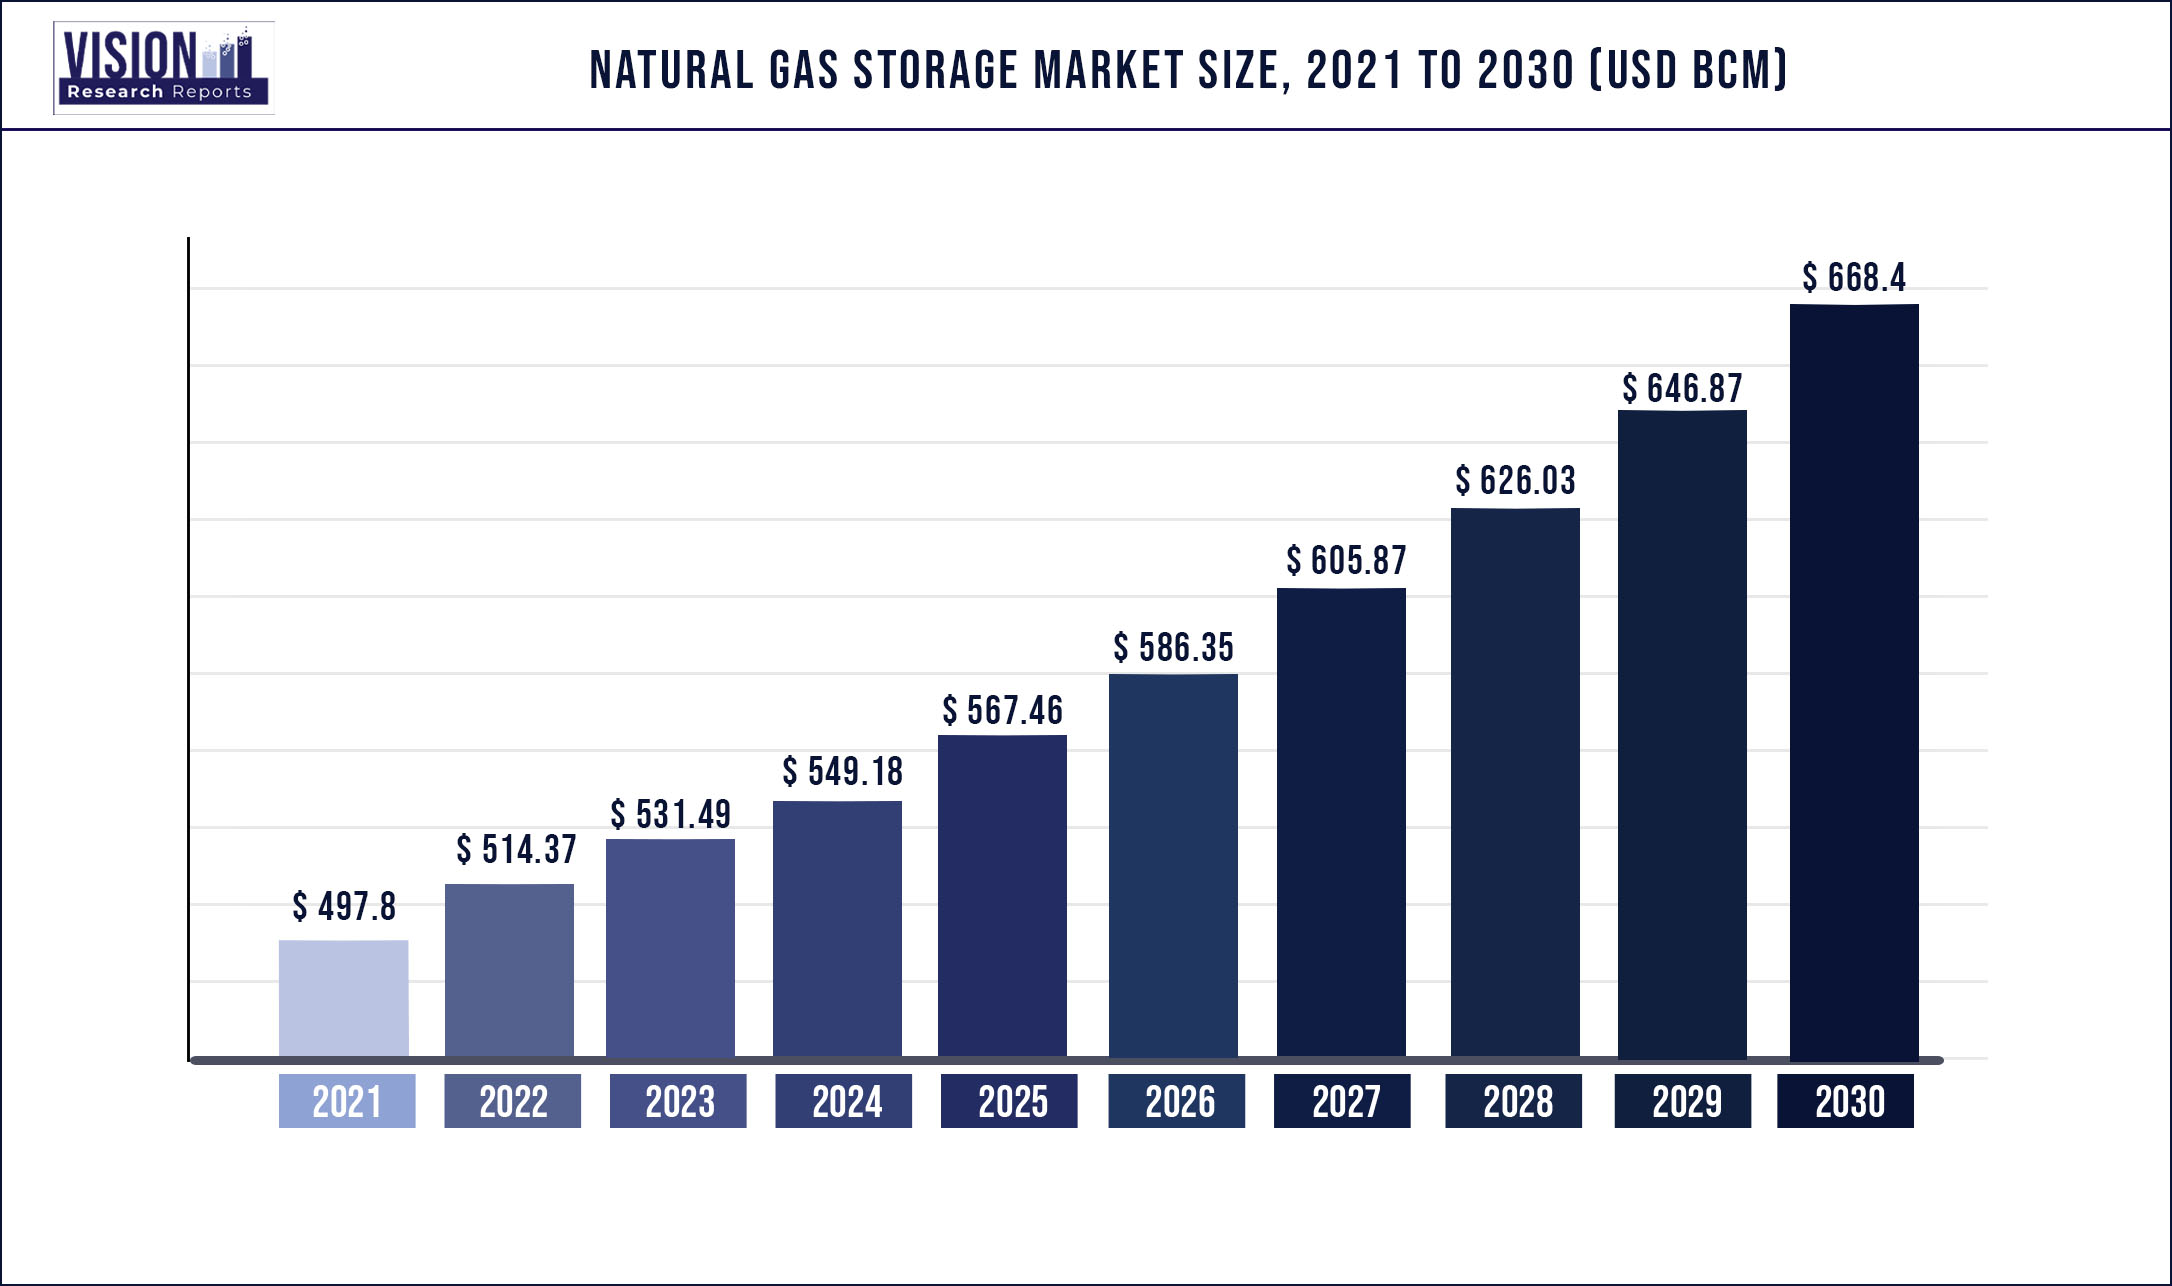 Natural Gas Storage Market Size 2021 to 2030